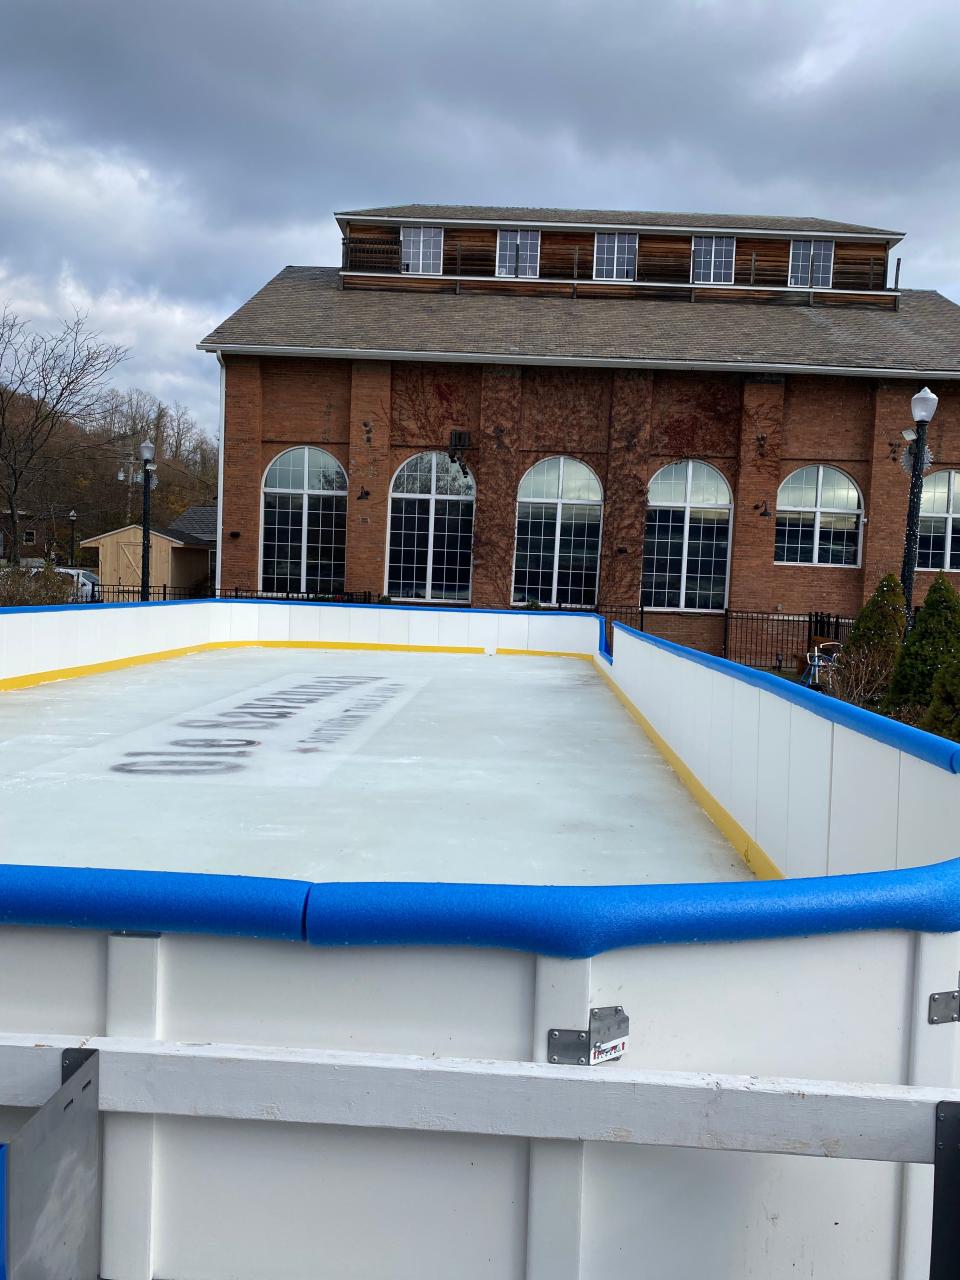 Ole Savannah Southern Table & Bar in Kingston has just opened a skating rink.